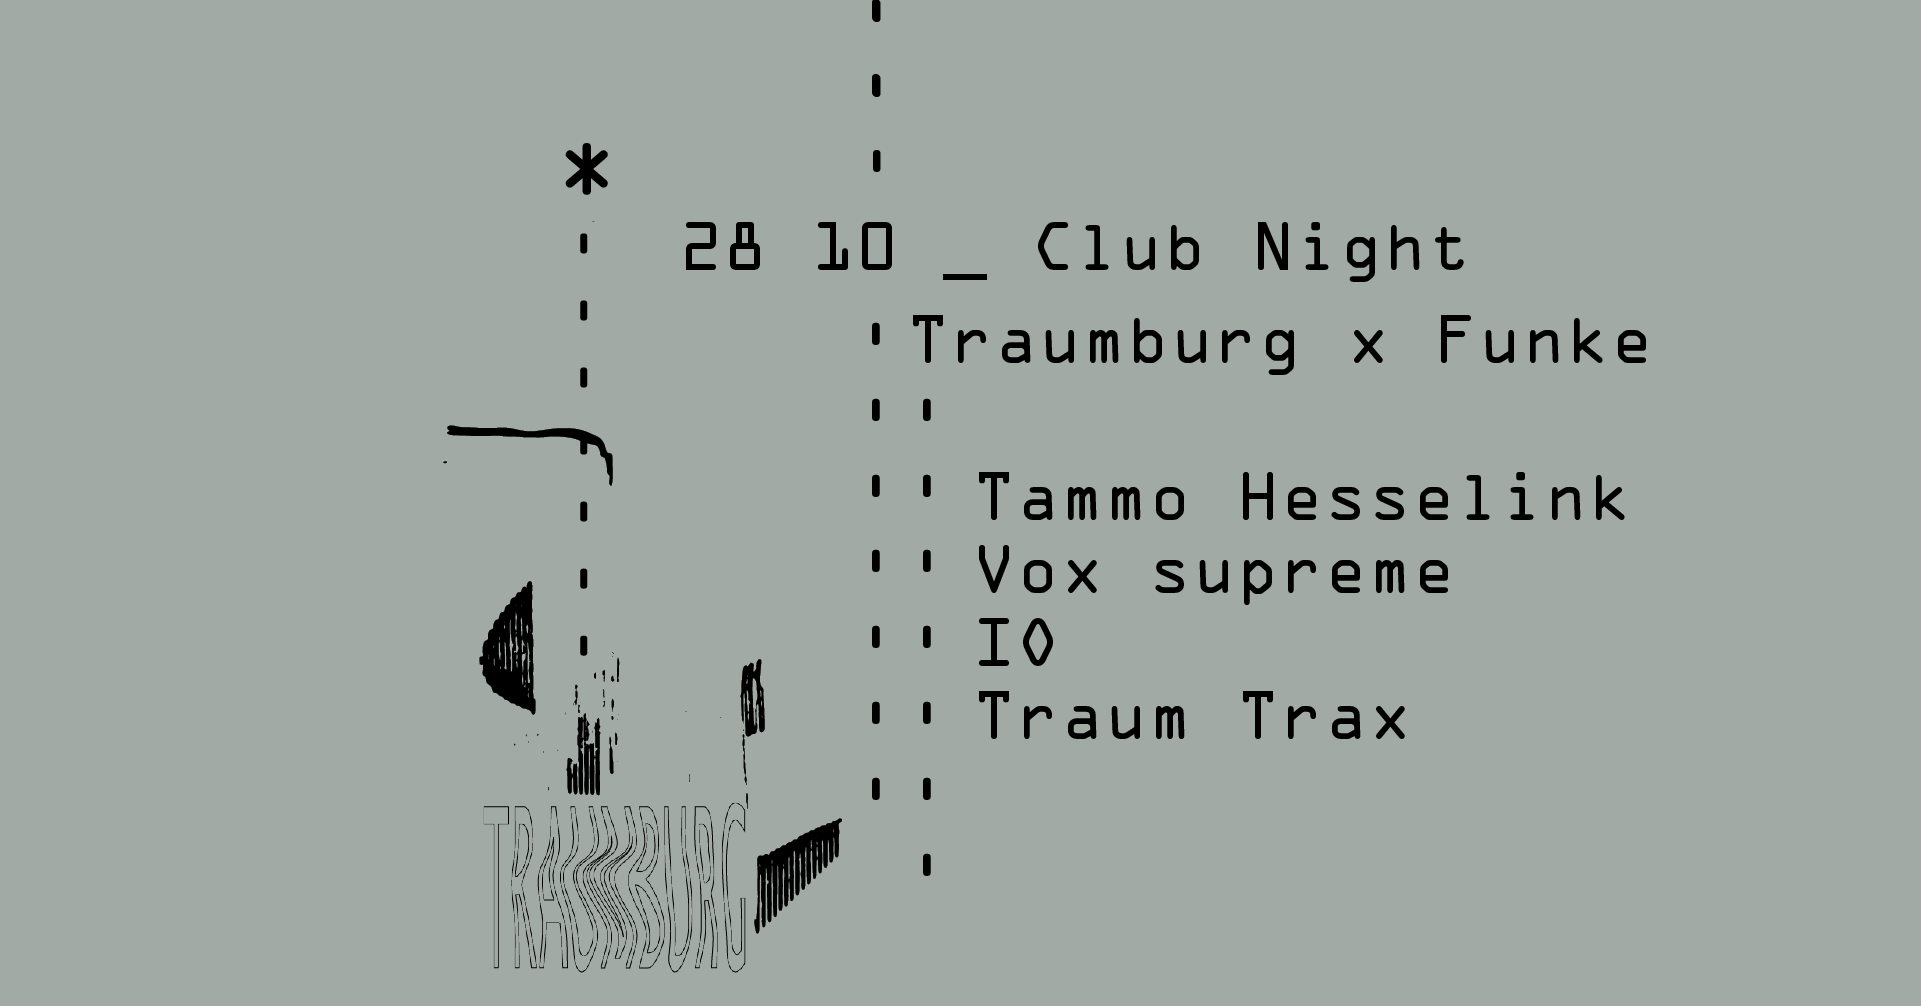 Traumburg x Funke with Tammo Hesselink, Vox supreme, IO, TraumTrax - Página frontal